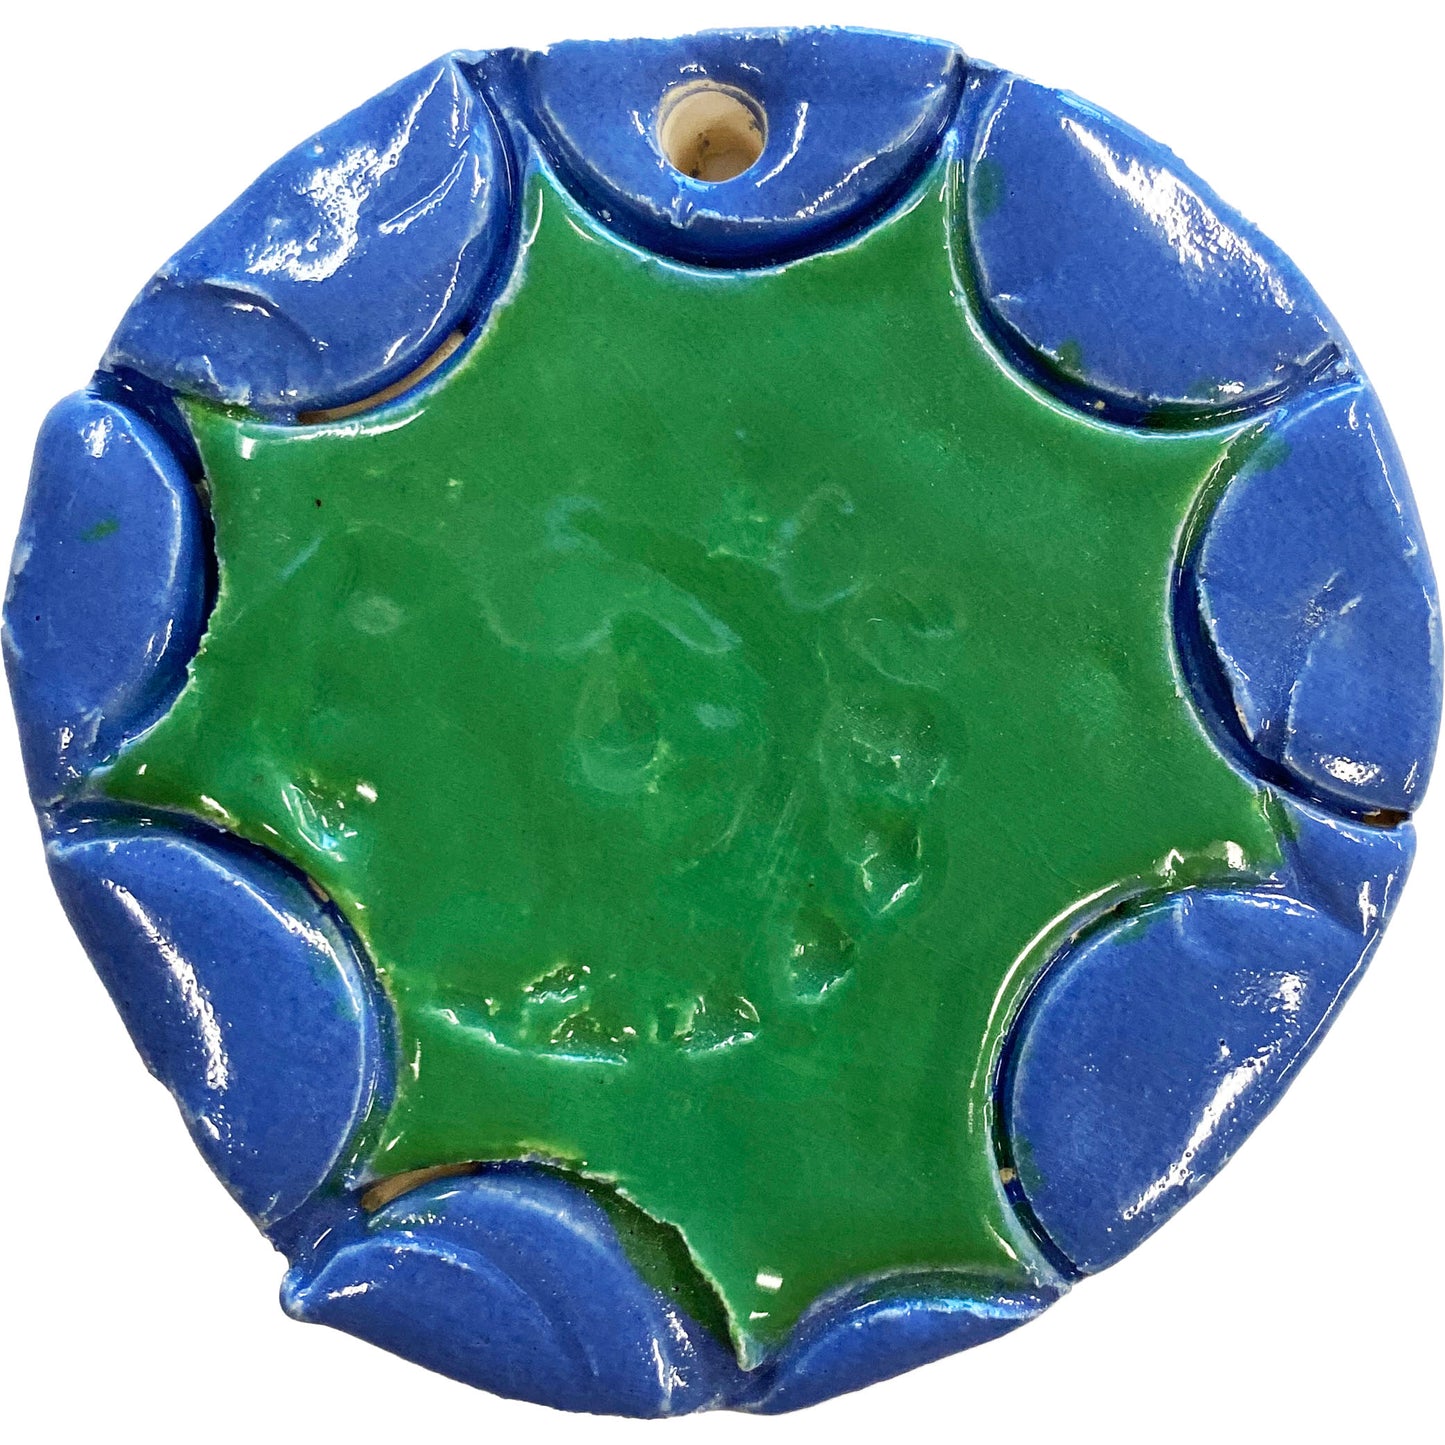 Ceramic Arts Handmade Clay Crafts Fresh Fish Glazed 3-inch x 3-inch Ornament made by Lisa Uptain